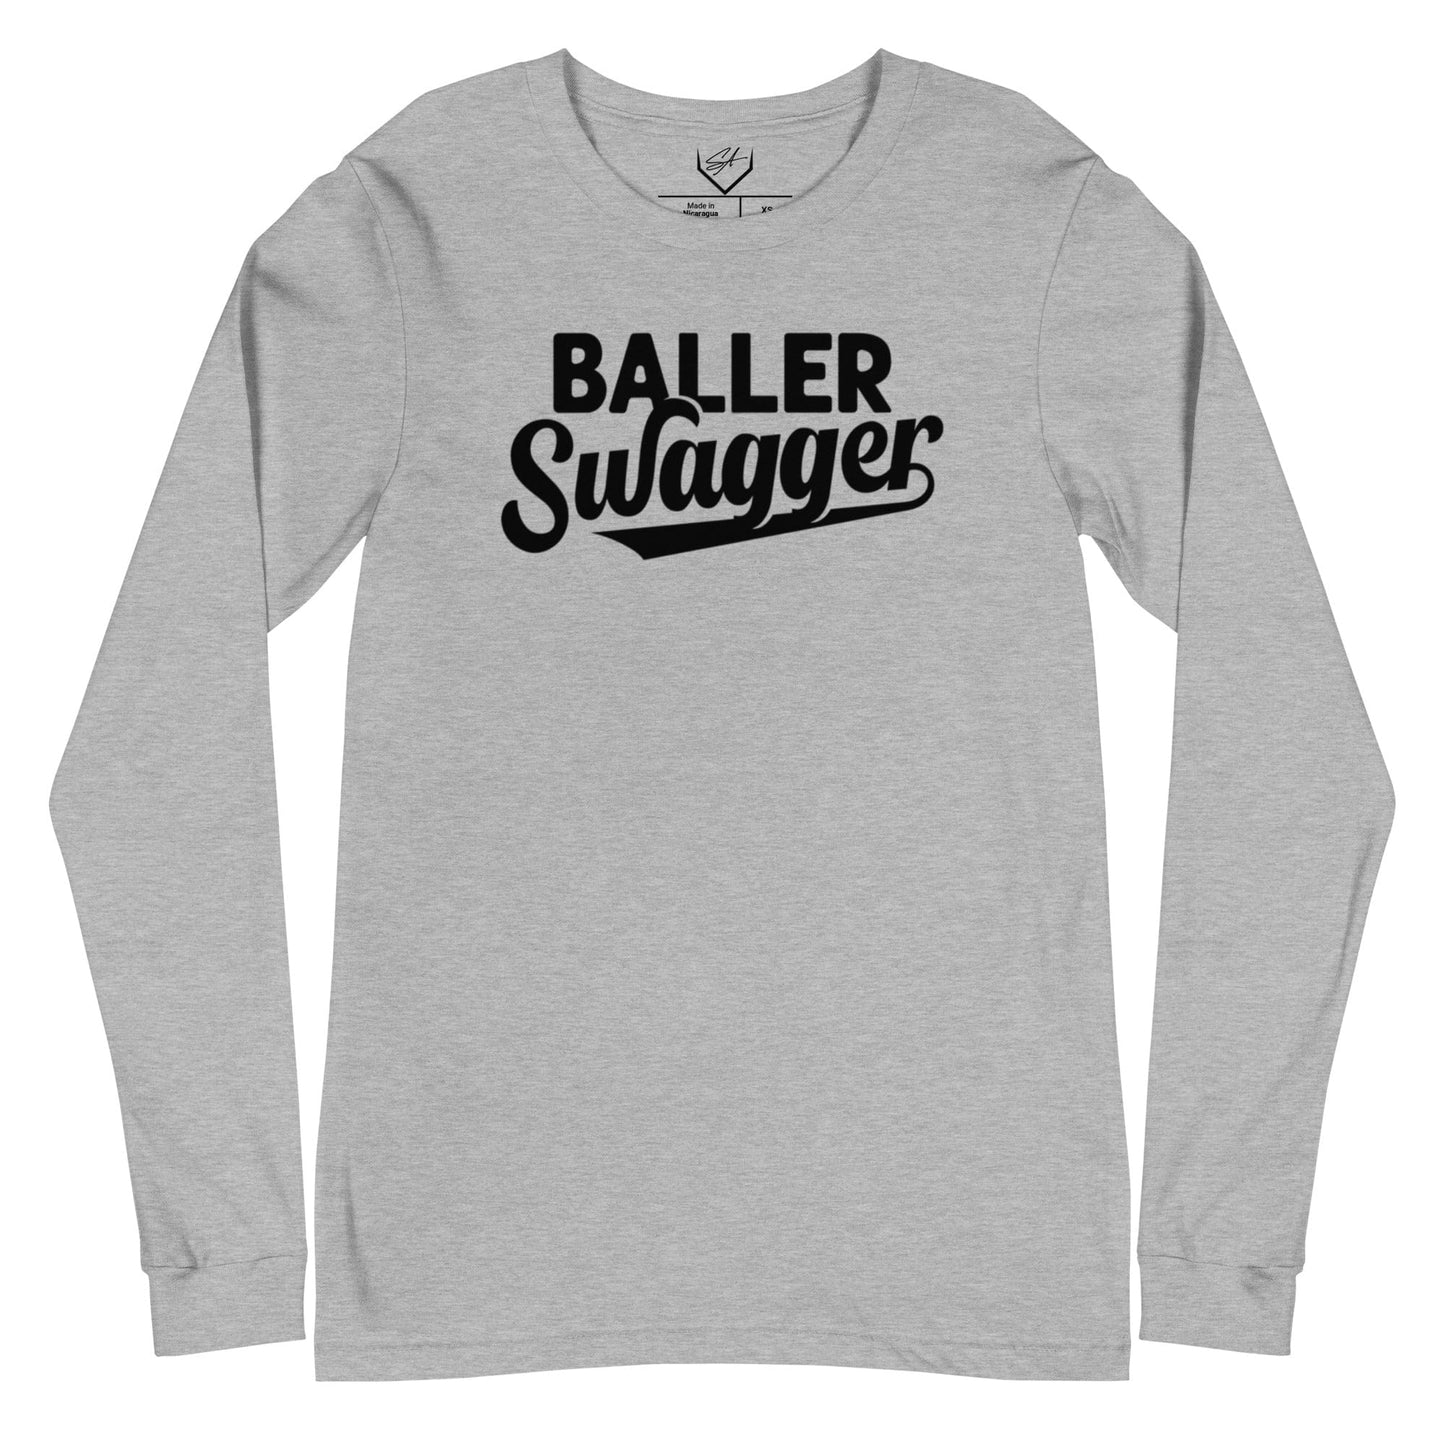 Baller Swagger - Adult Long Sleeve